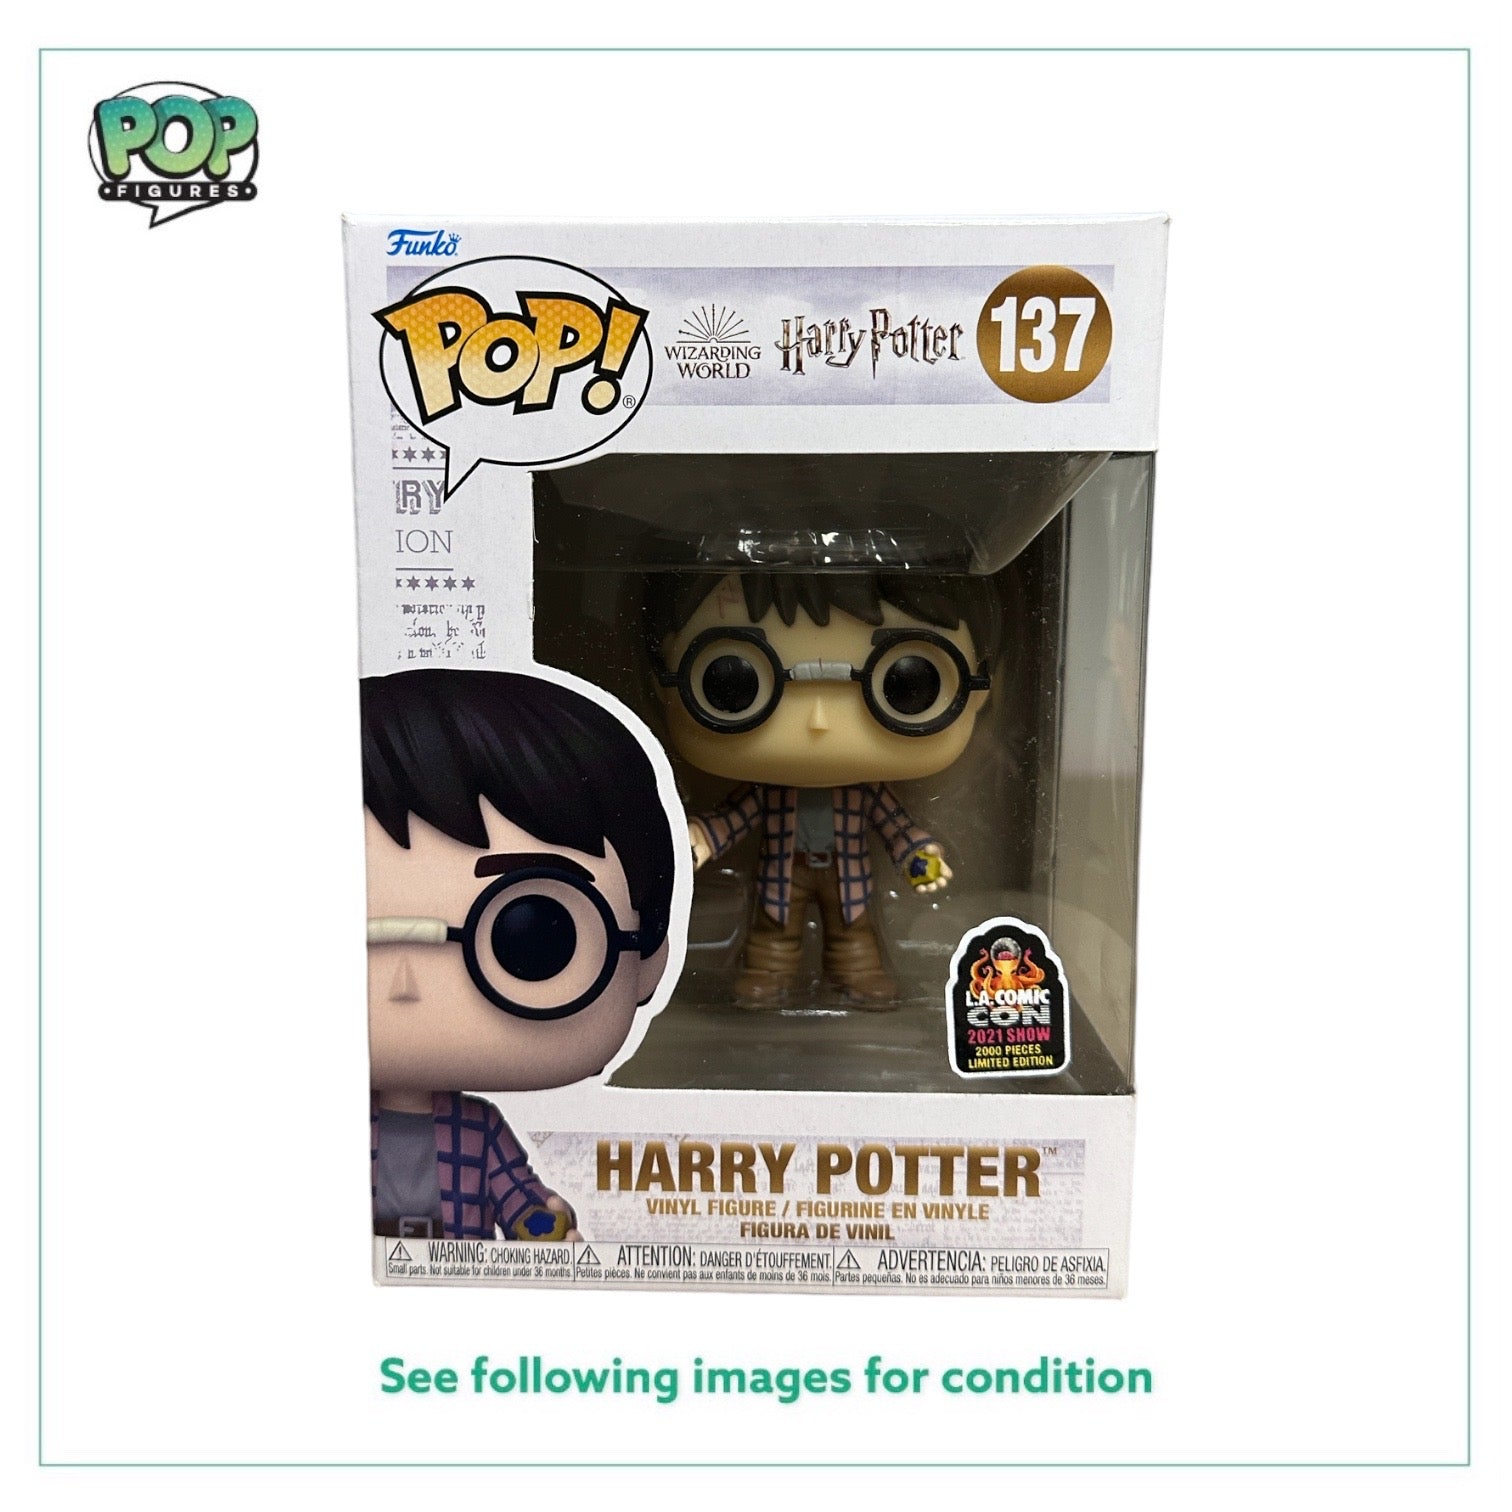 Harry Potter #137 (w/ Chocolate Frog) Funko Pop! - Harry Potter - LACC 2021 Exclusive LE2000 Pcs - Condition 7/10